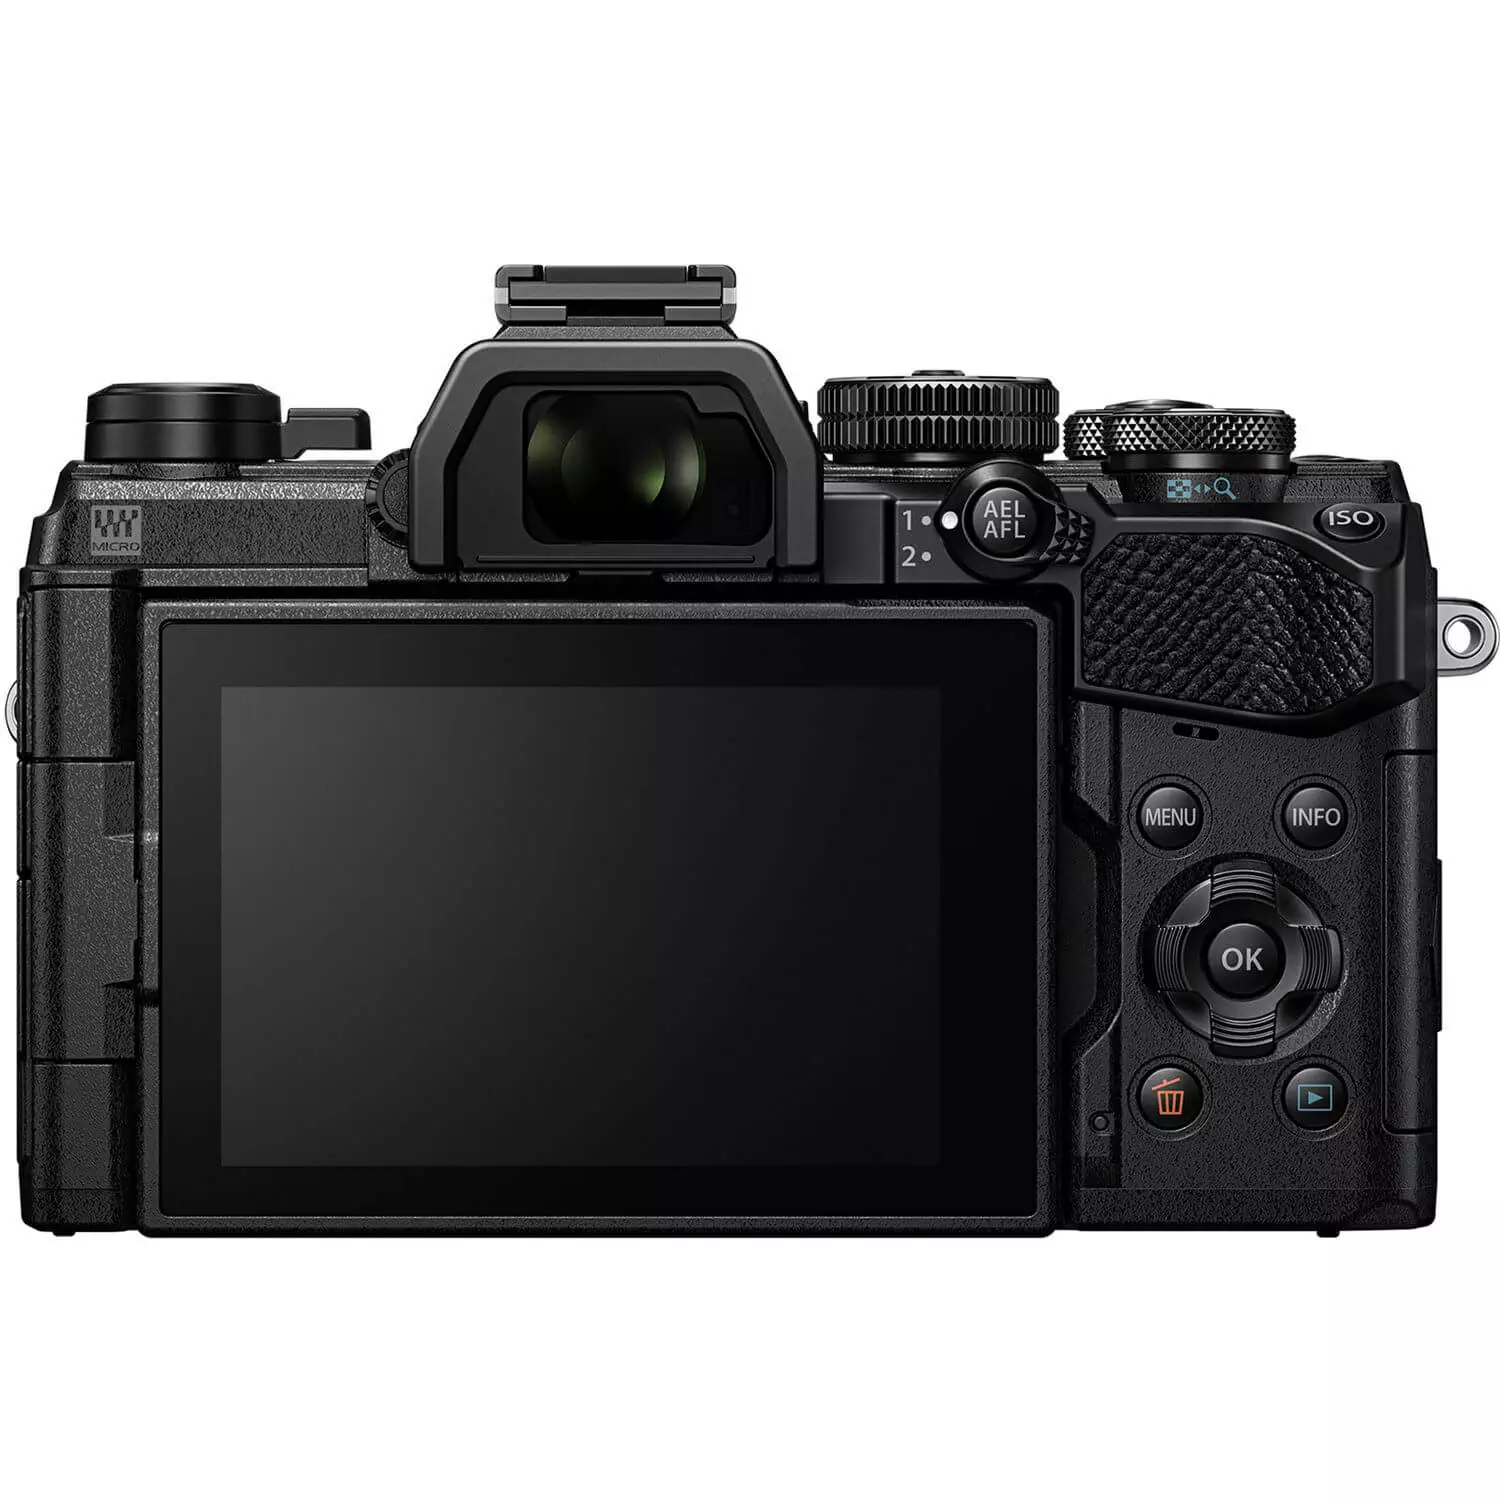 Olympus OM-D E-M5 Mark III Mirrorless Digital Camera with 14-150mm Lens Black